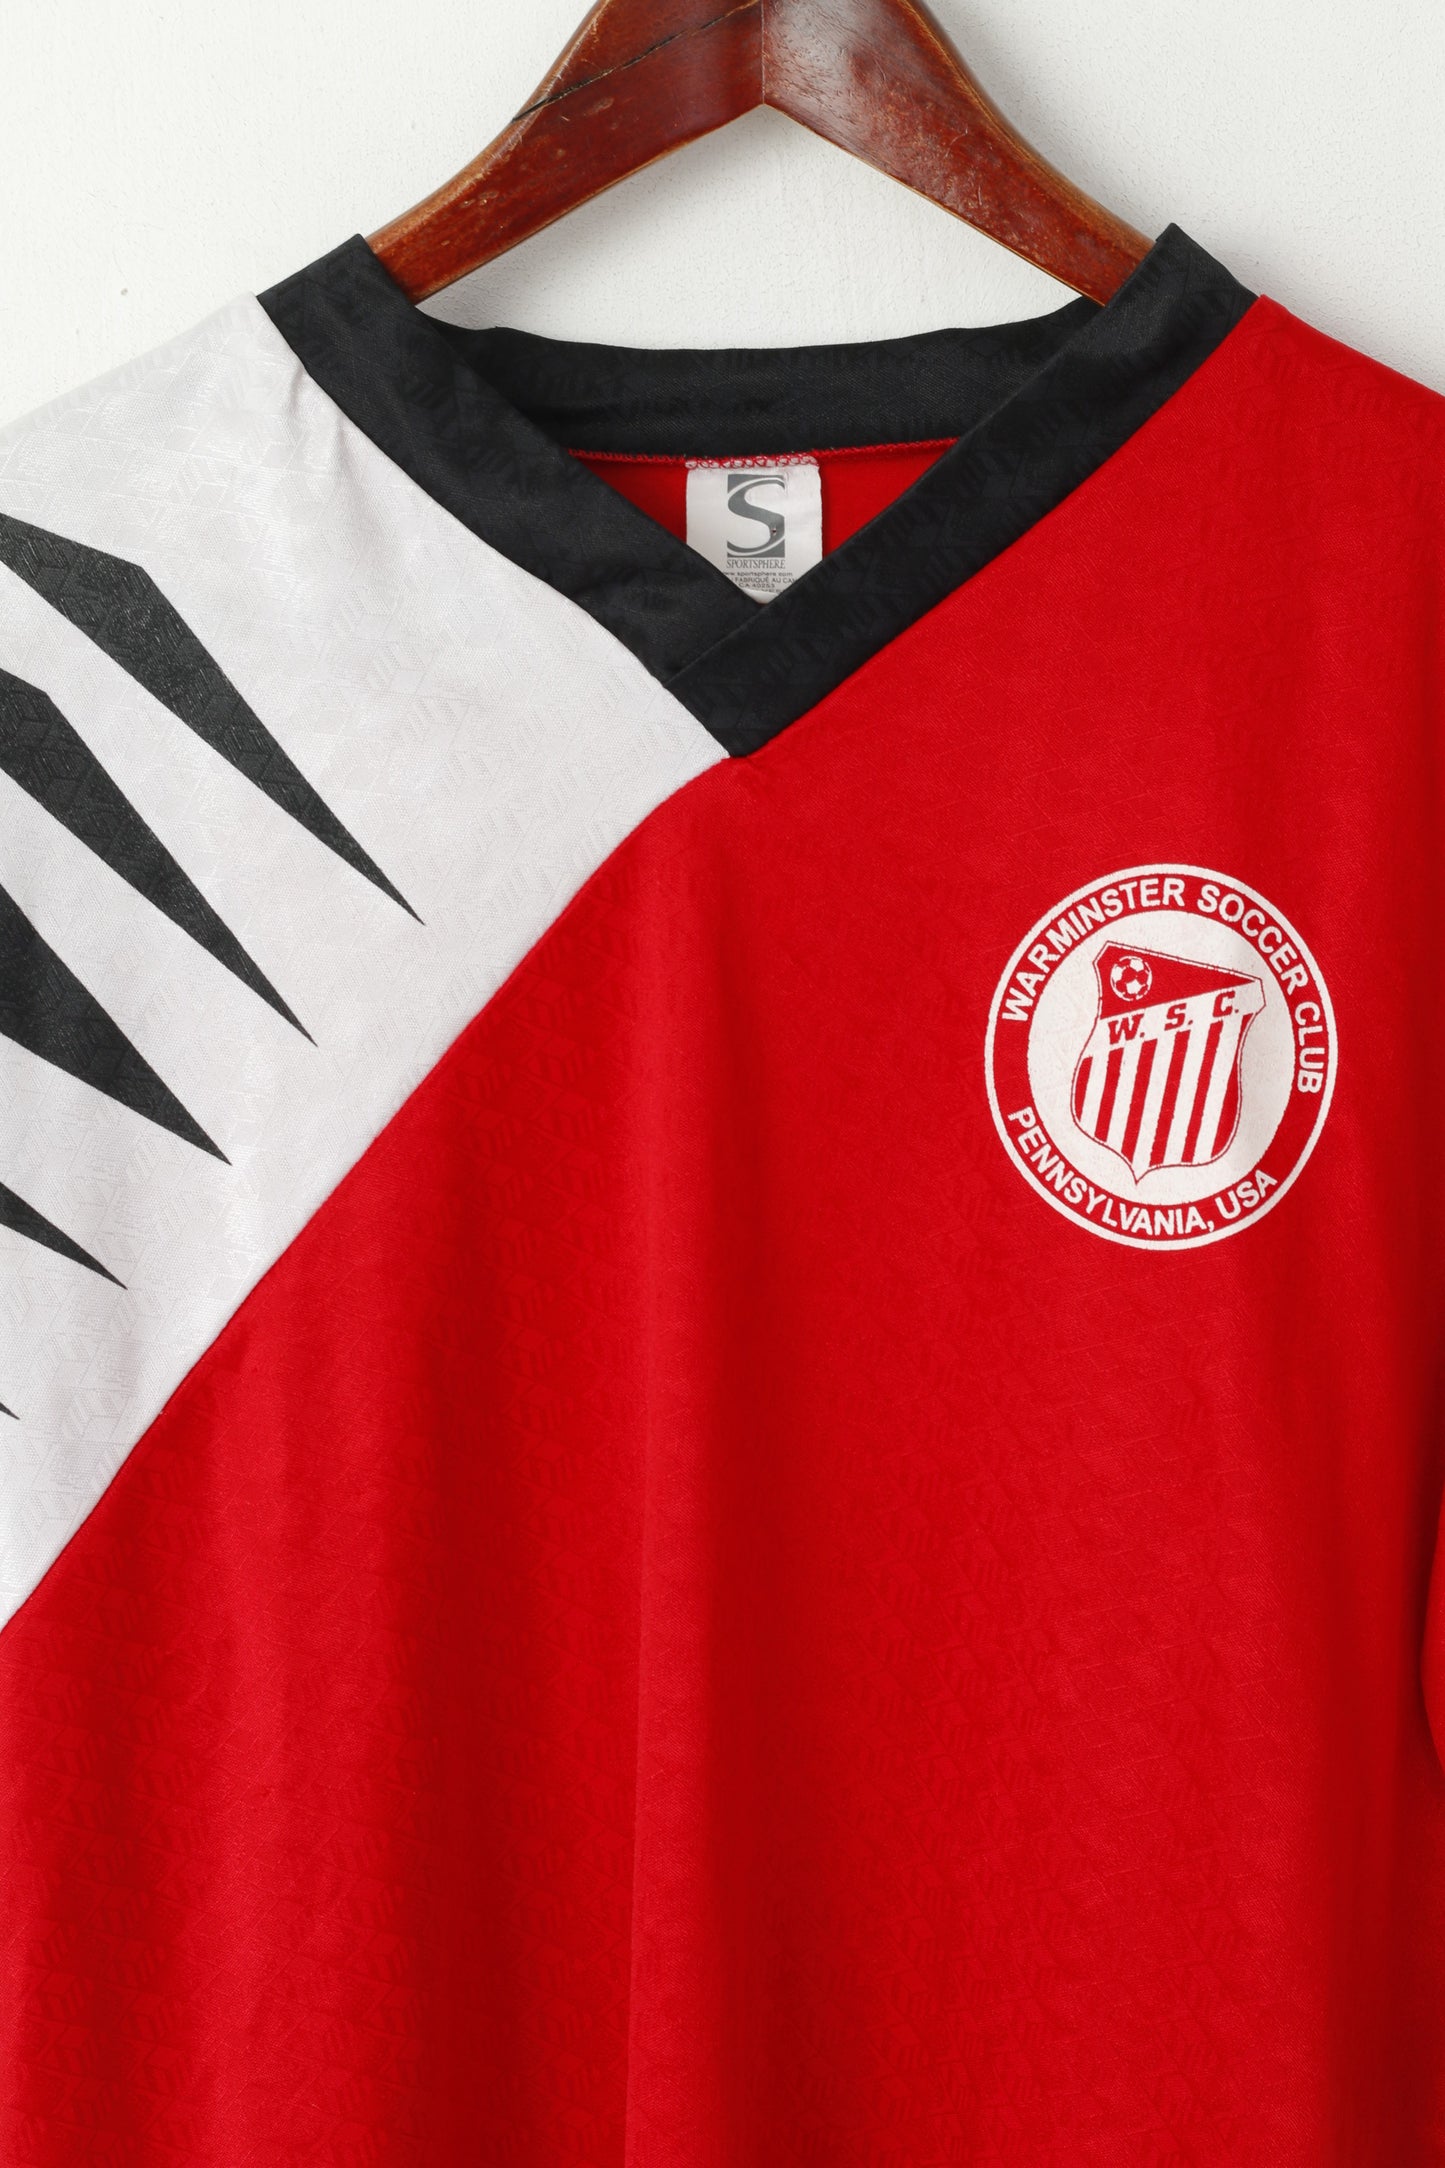 Sportsphere Mens XL Shirt Red Vintage Warminster Soccer Club Pennsylvania Usa #13 Top